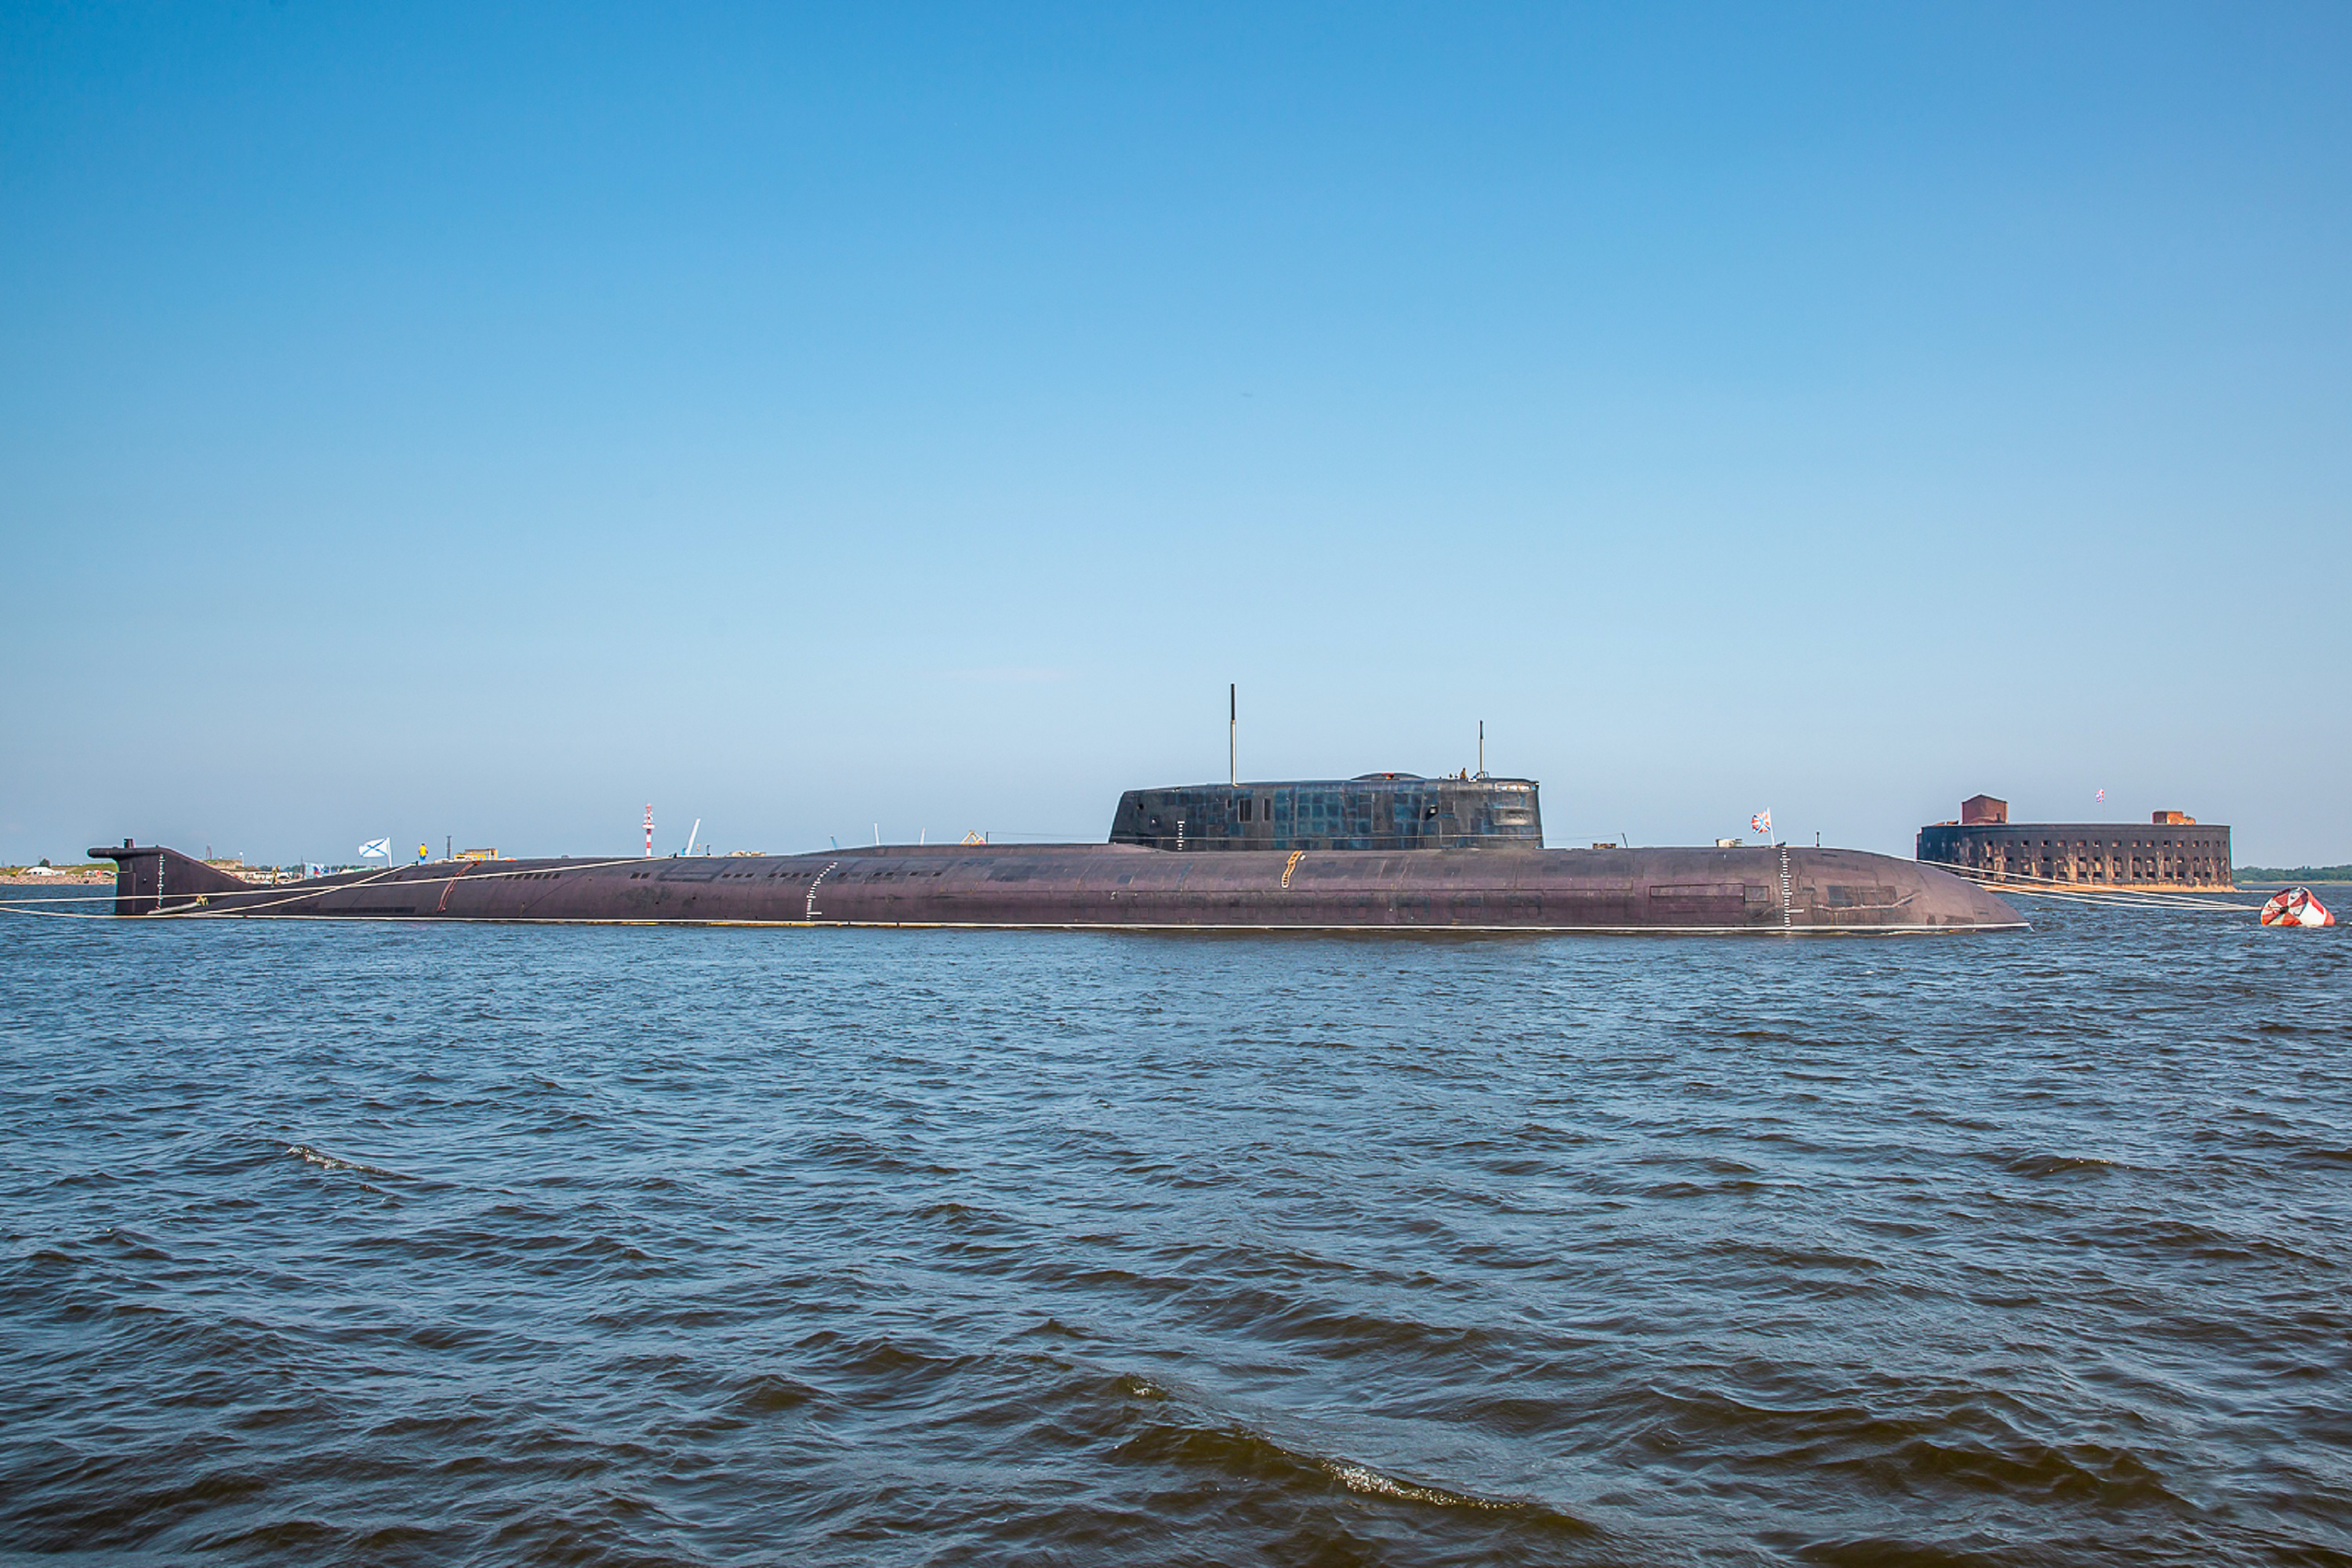 Пл пр т. Атомная подводная лодка к-266 «Орел». Подводная лодка акула в Кронштадте. АПЛ Орел в Кронштадте. Атомная подлодка Кронштадт.